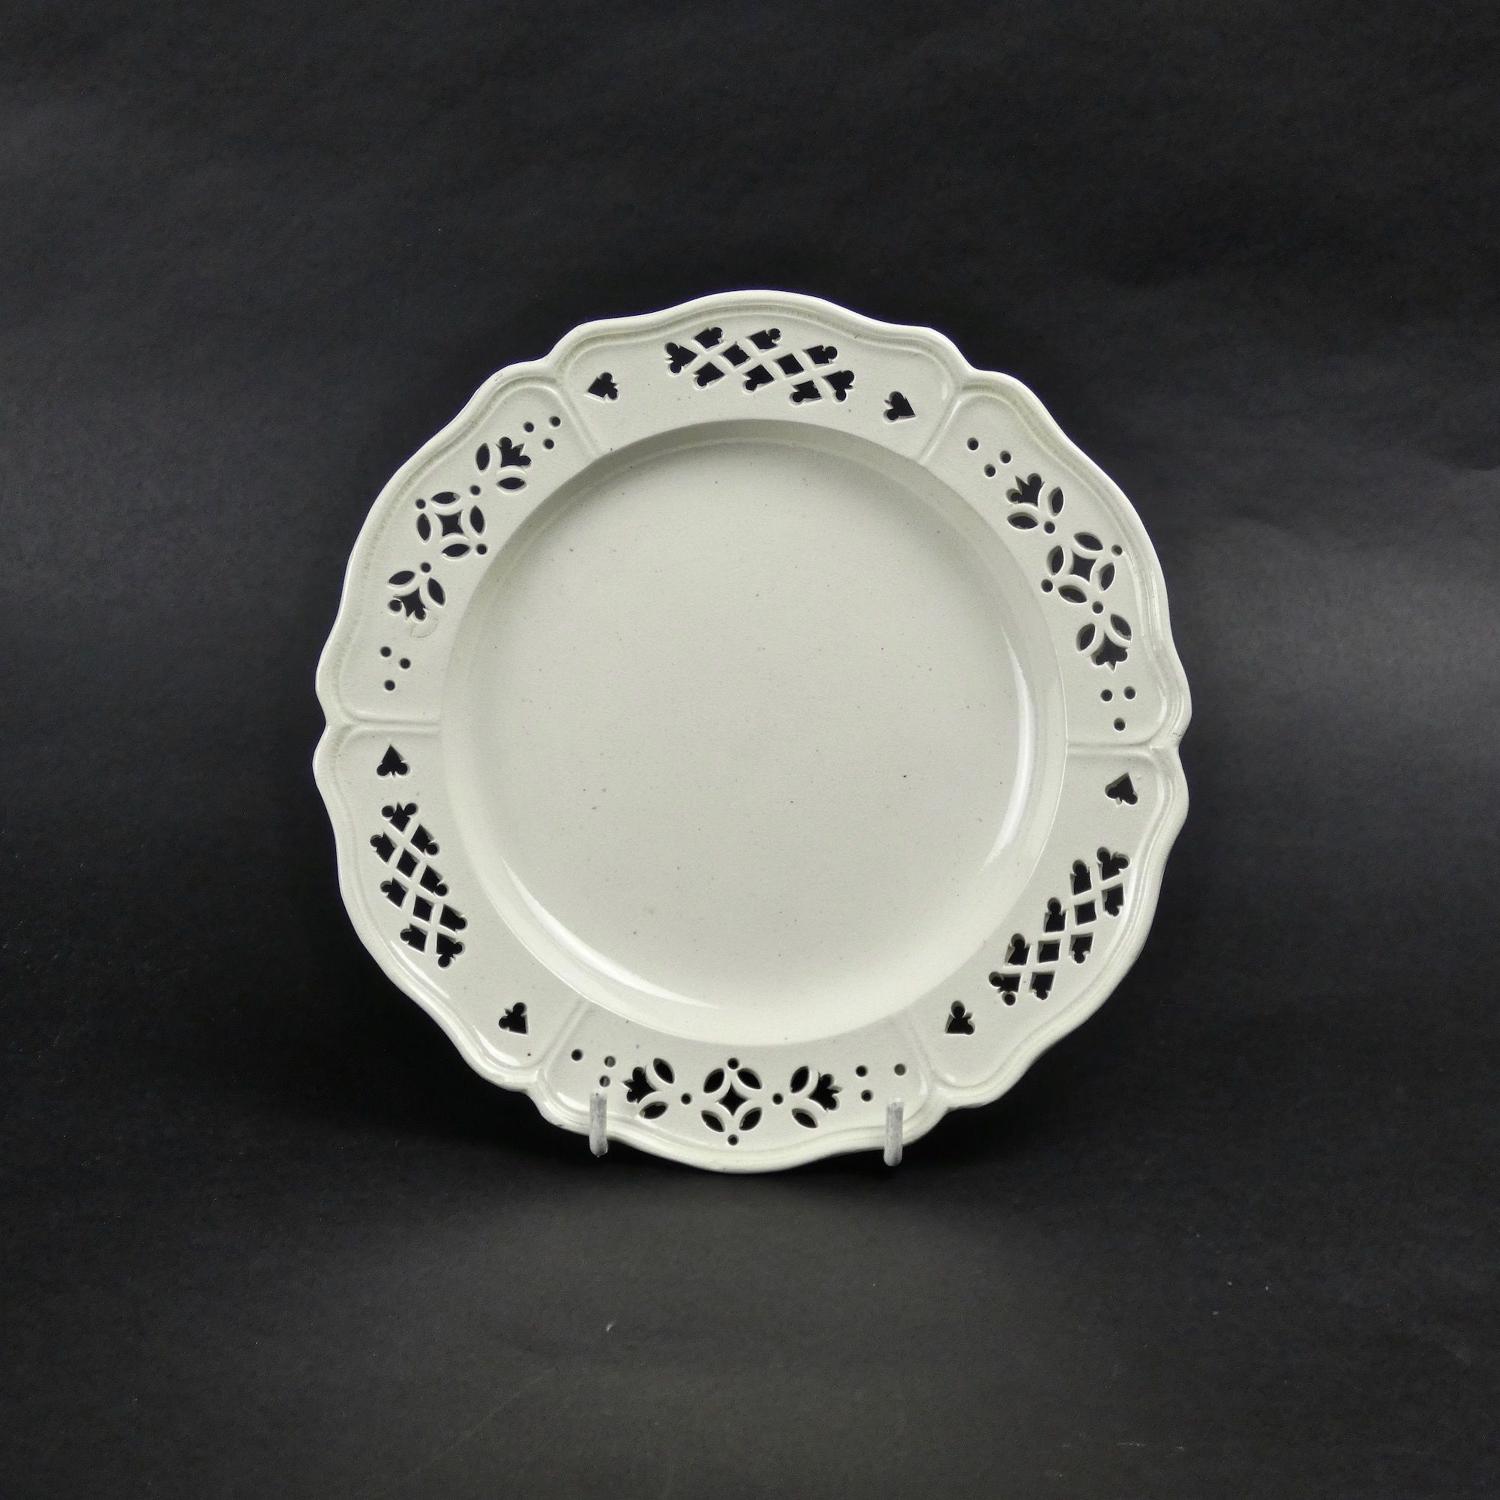 18th century, pierced creamware plate